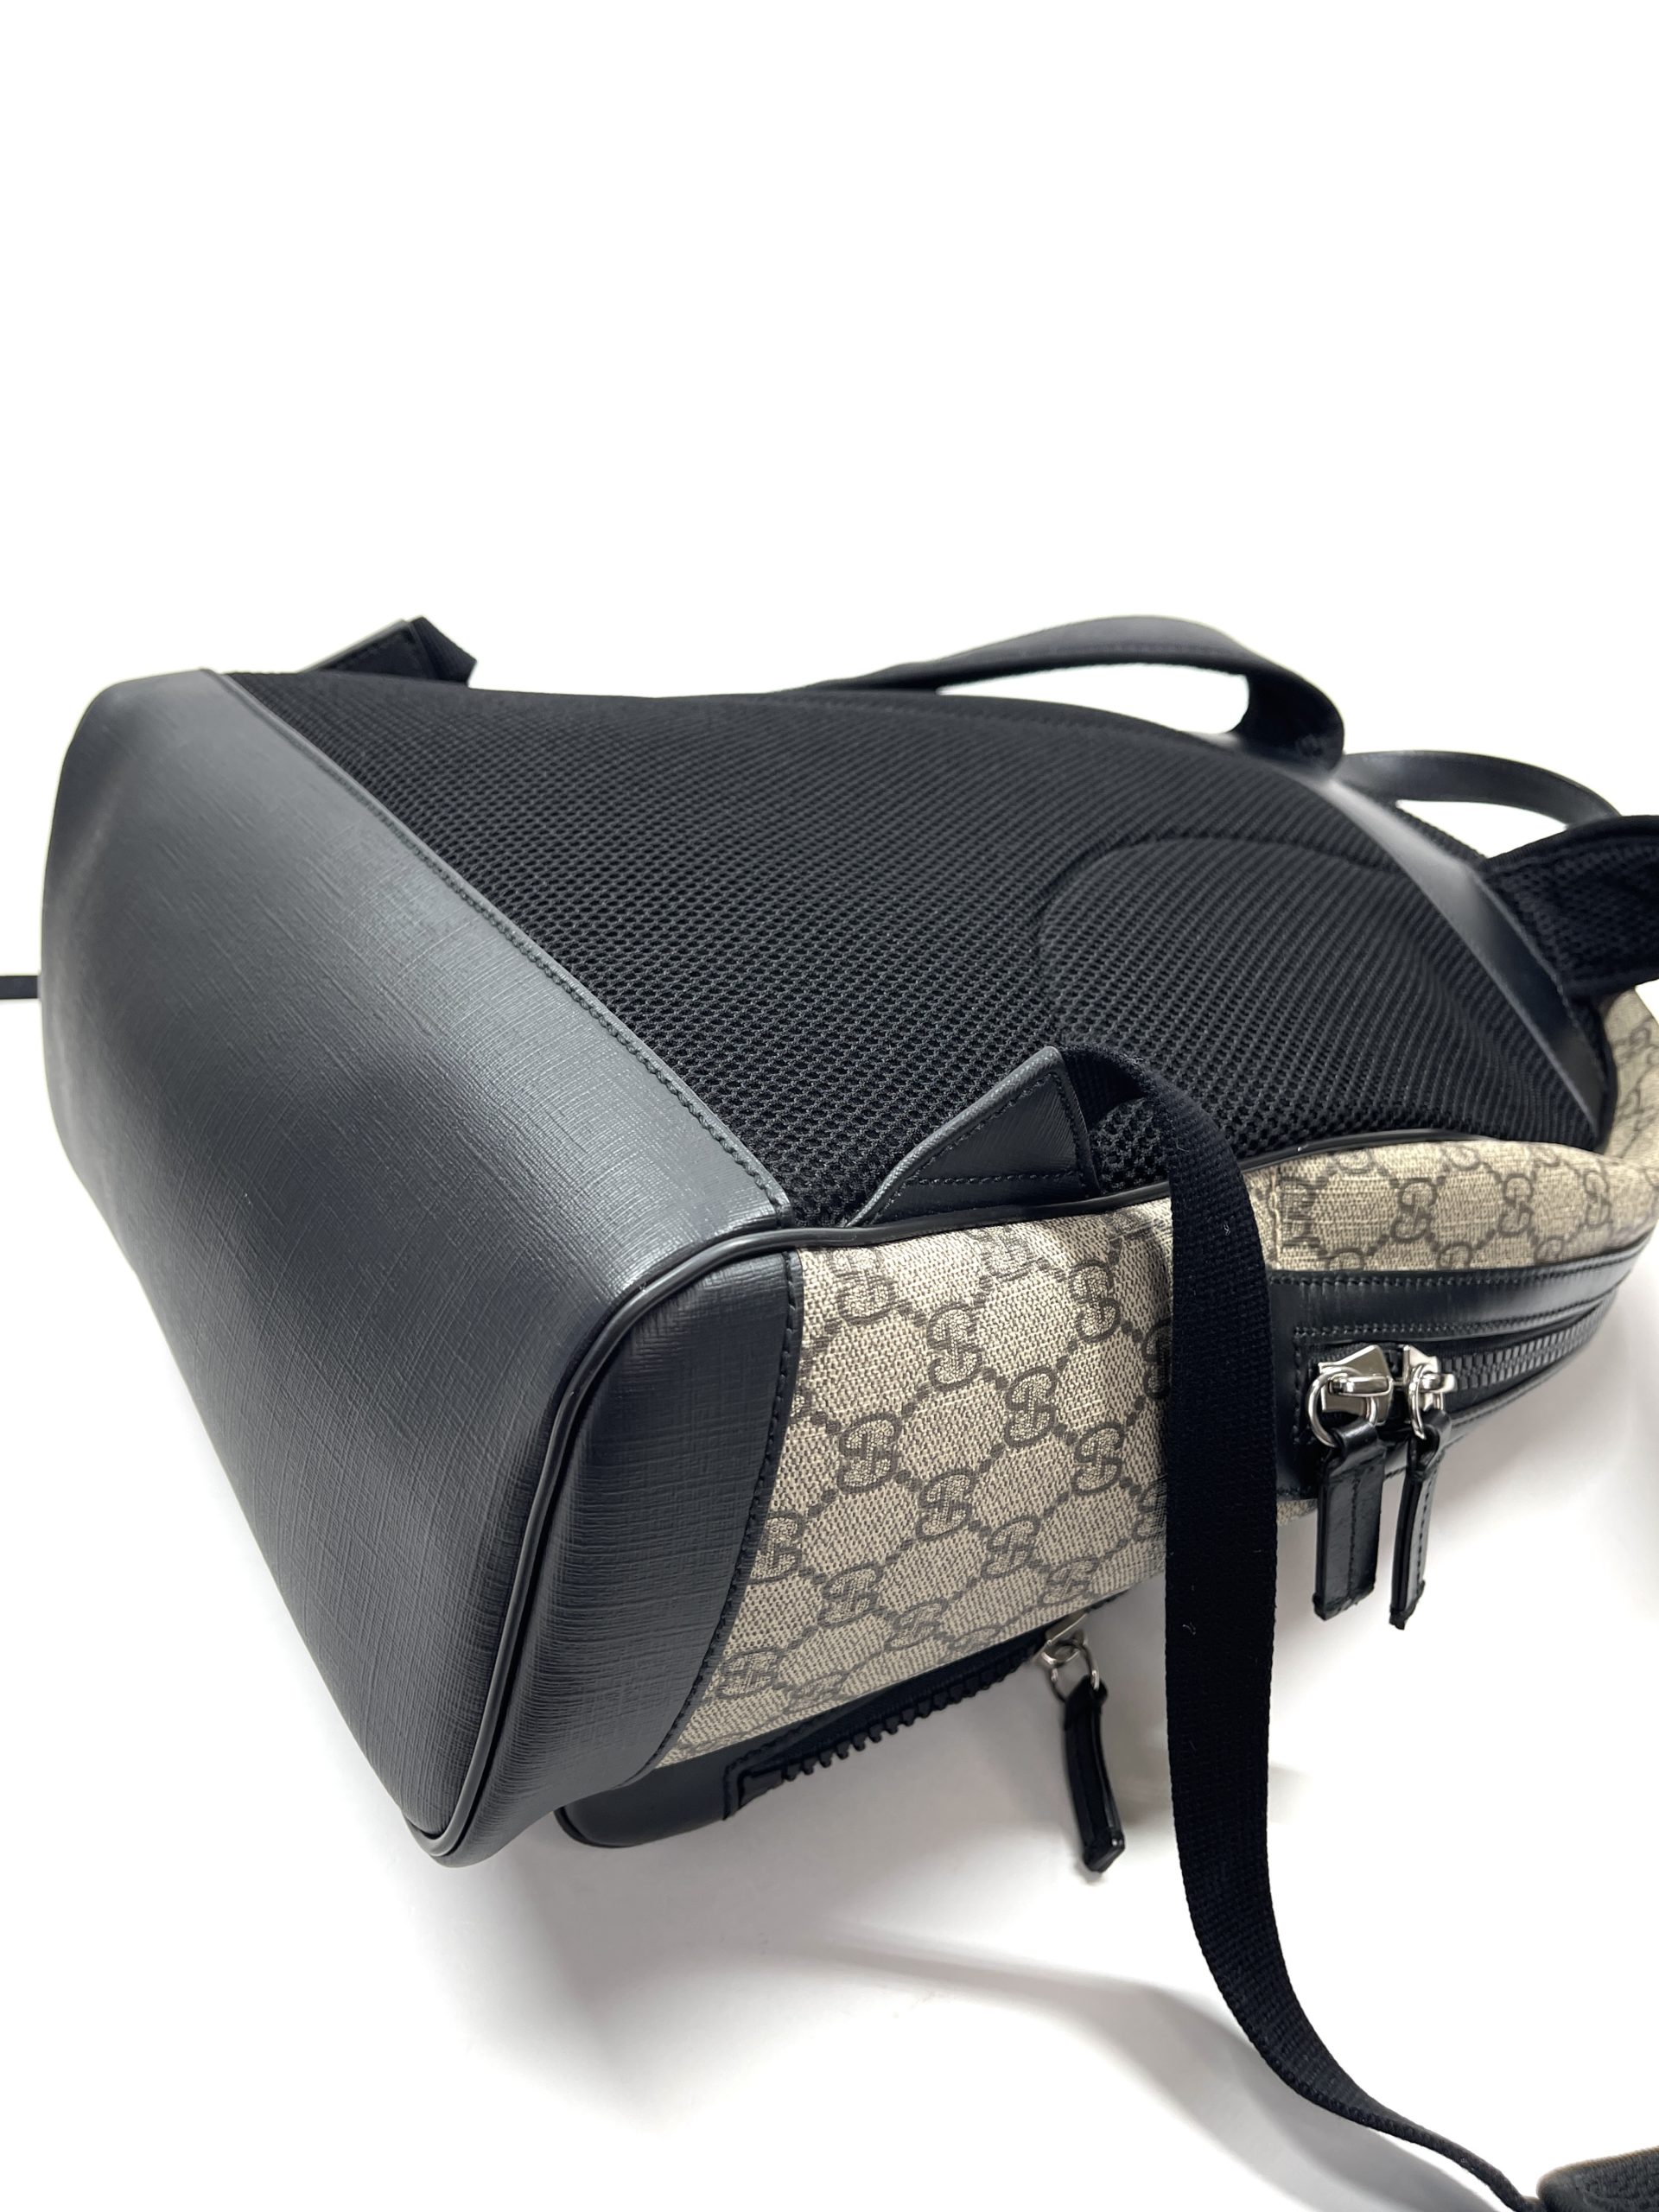 Gucci Gg Supreme Canvas Backpack Black, $775, Neiman Marcus